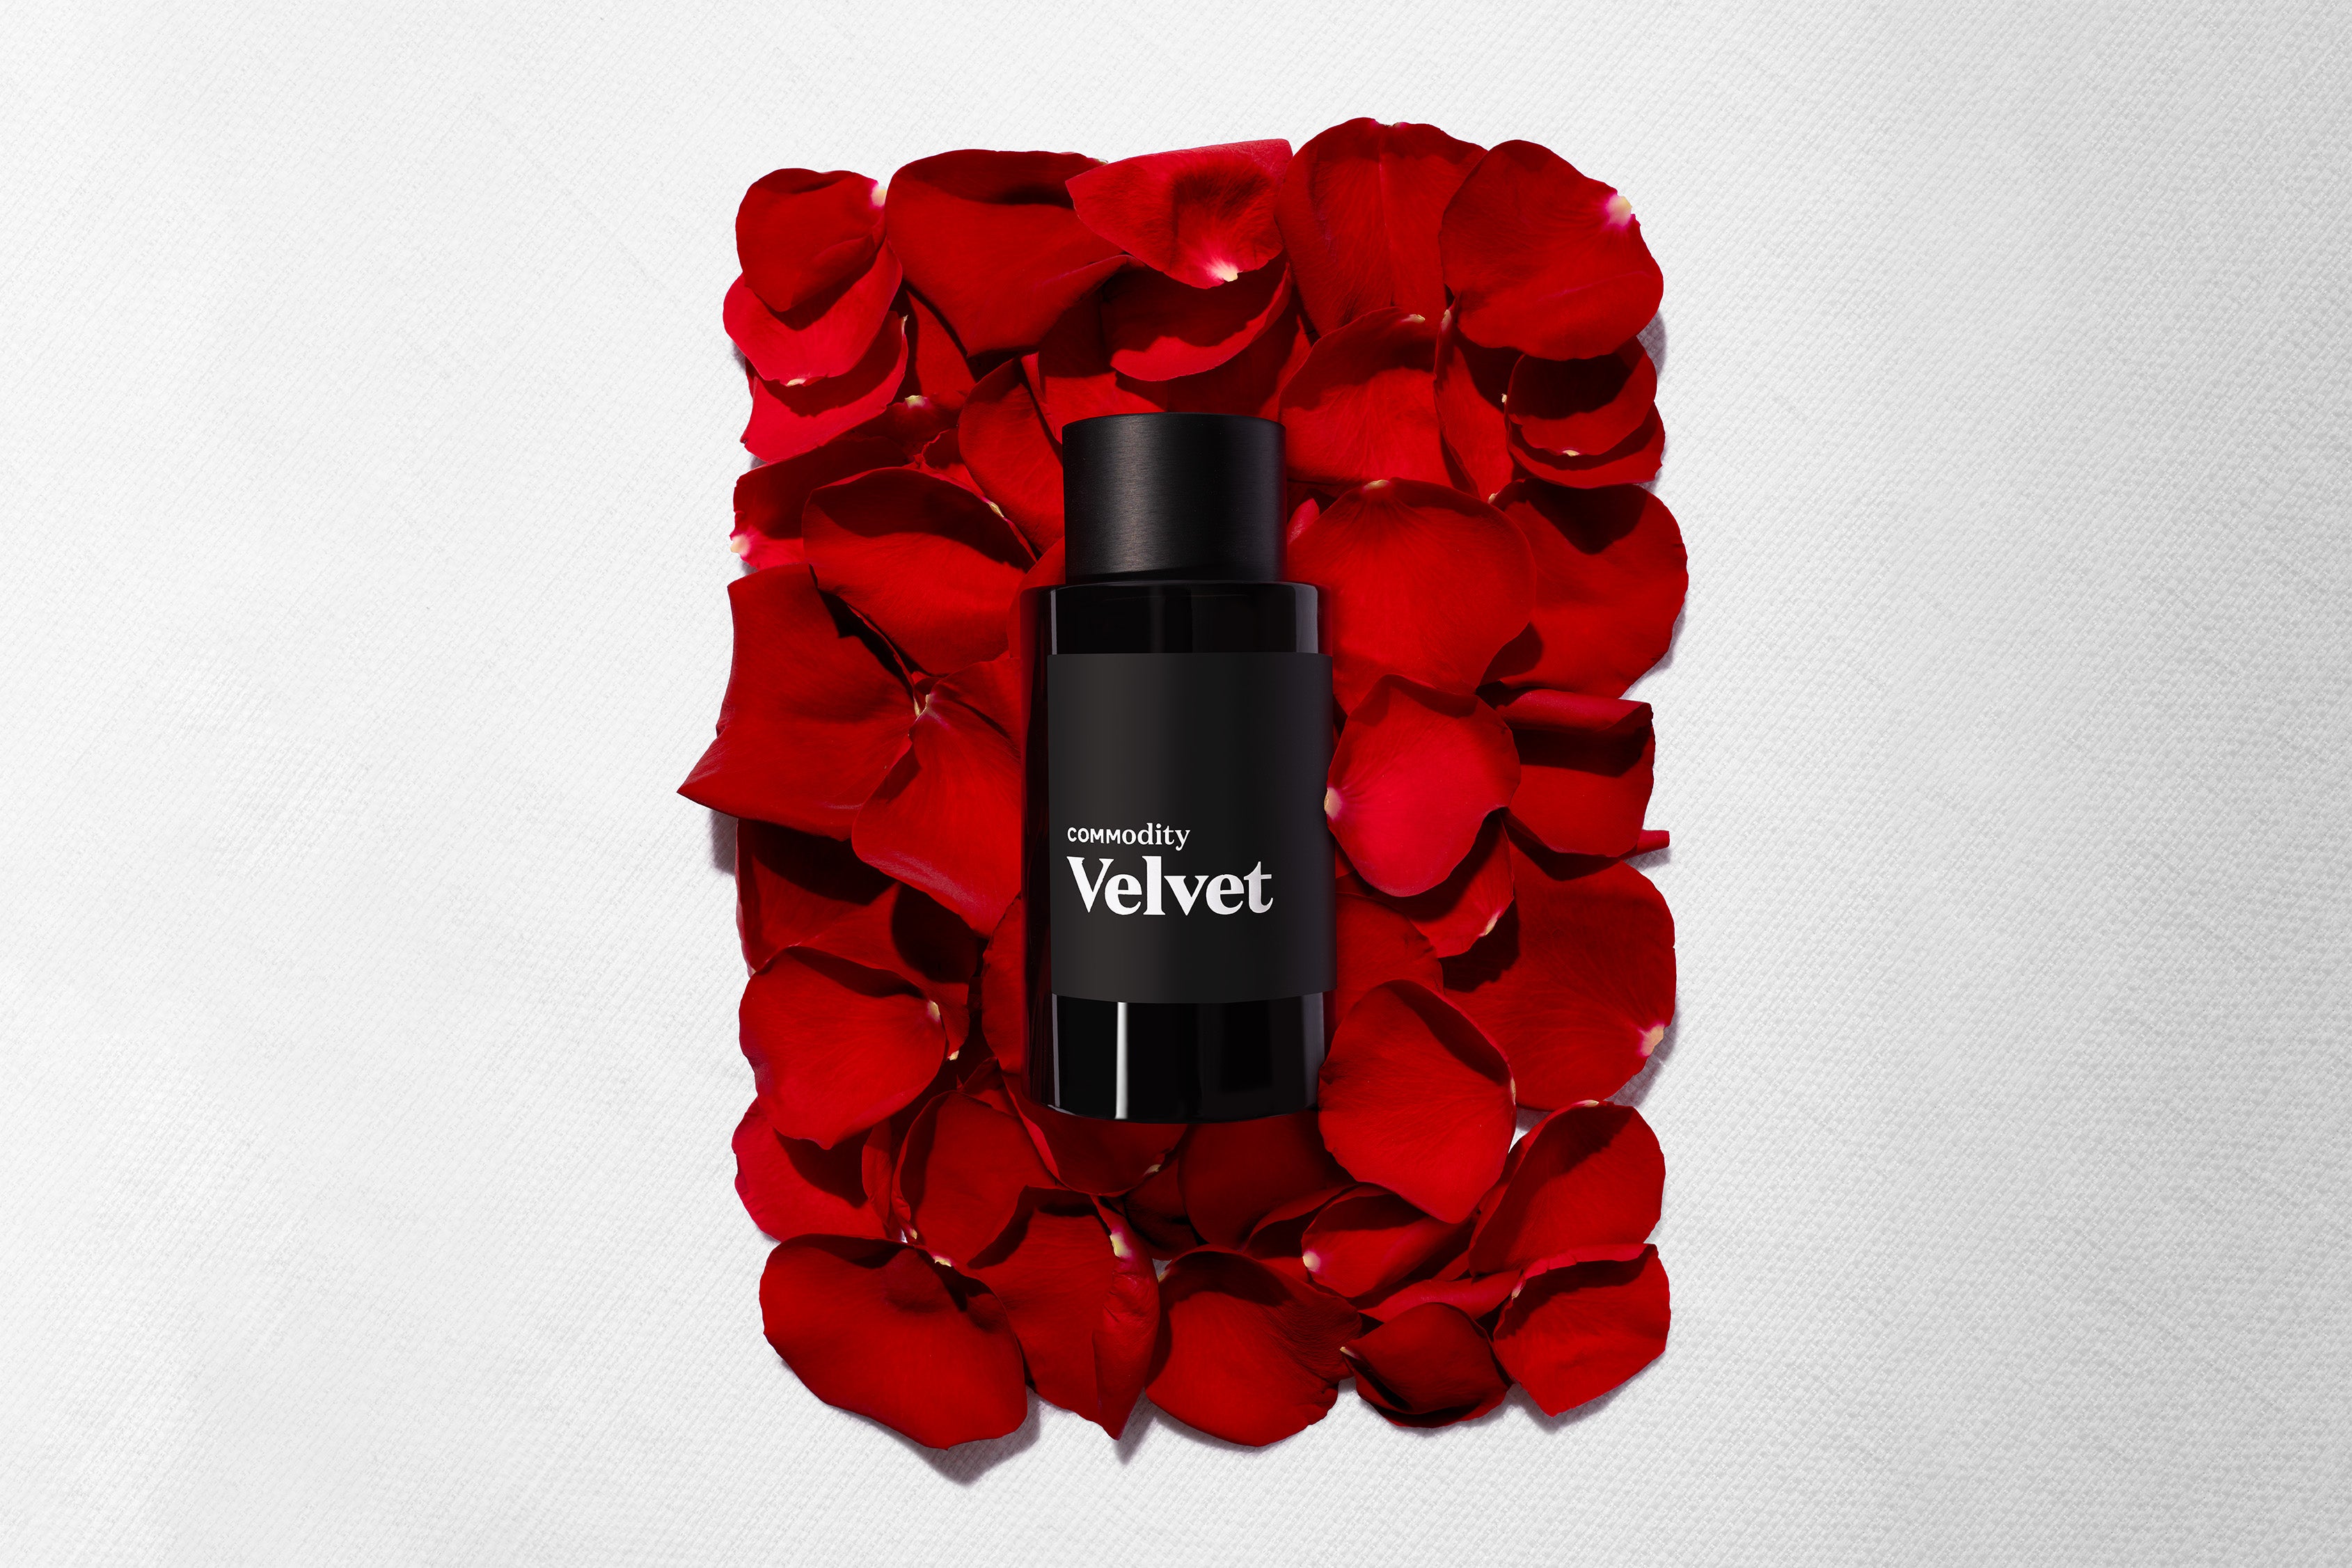 Na ten temat: Jak naprawdę pachną perfumy różane?